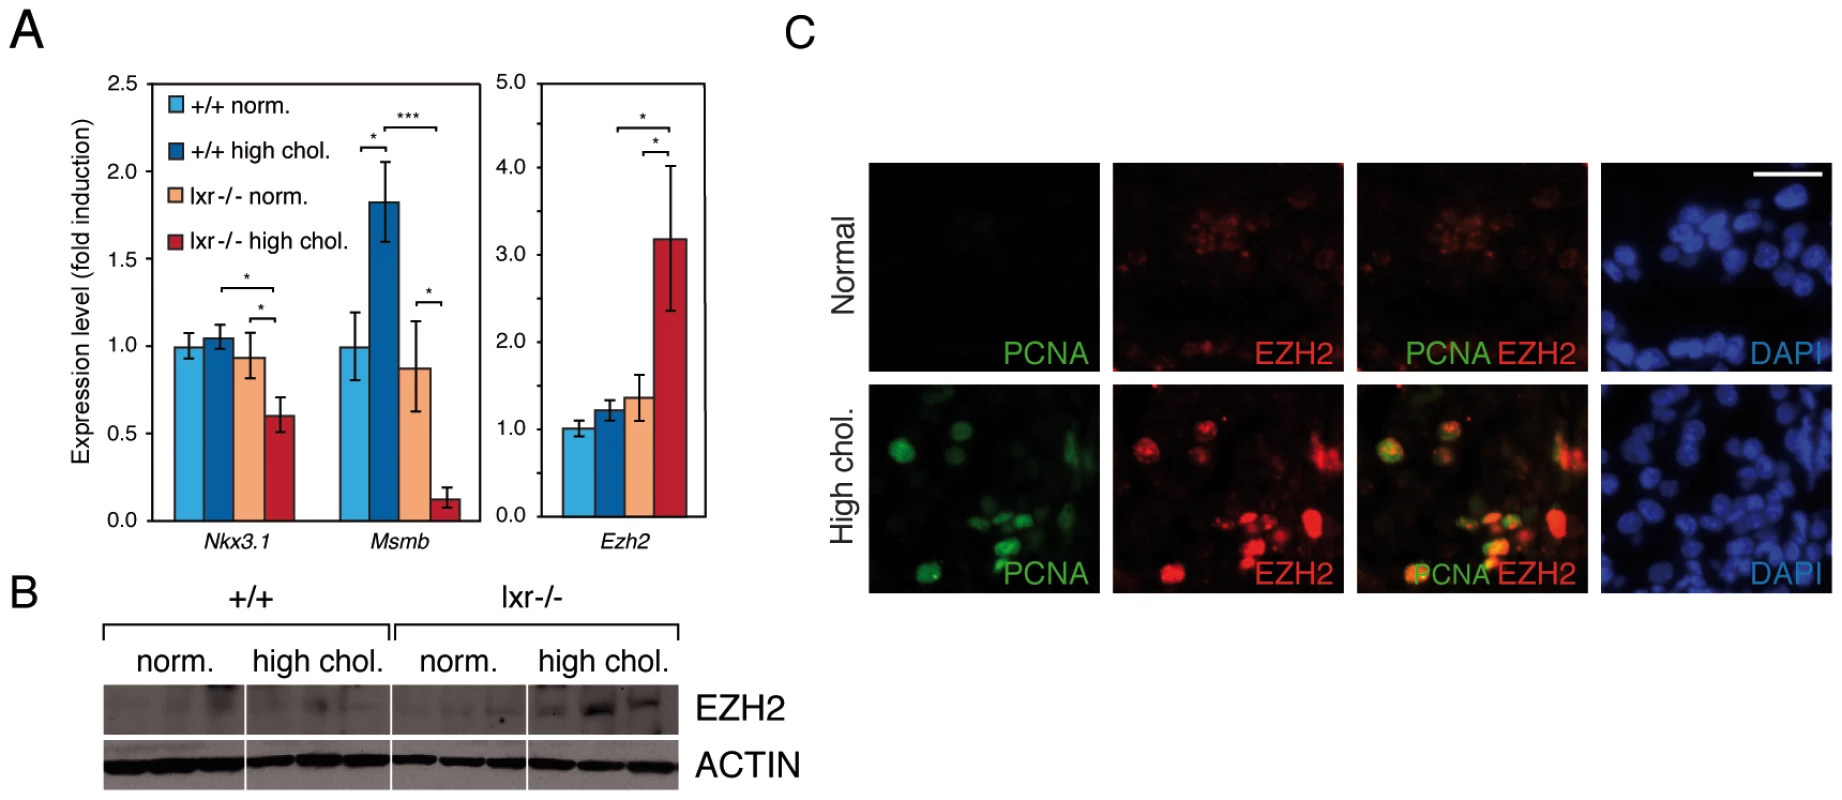 Disruption of cholesterol homeostasis induces the repression of <i>Nkx3.1</i> and <i>Msmb</i> tumor suppressor genes and upregulation of the <i>Ezh2</i> histone methyltransferase gene.